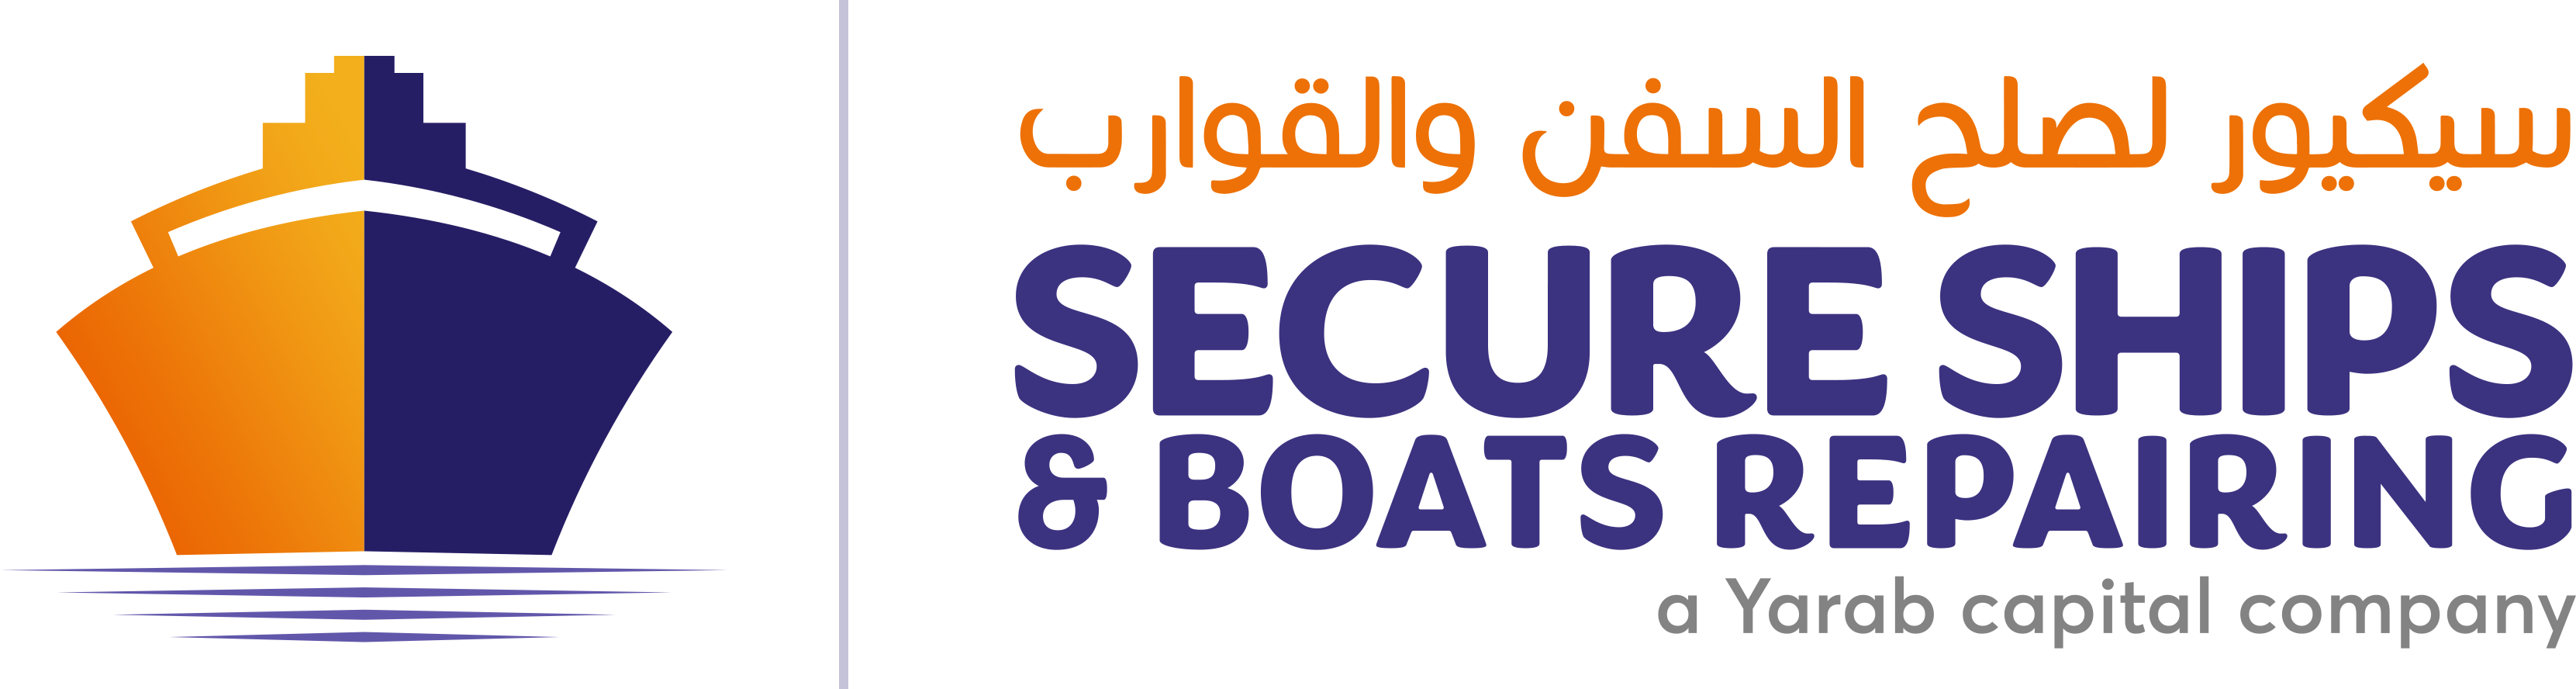 SECURE SHIPS & BOATS REPAIRING